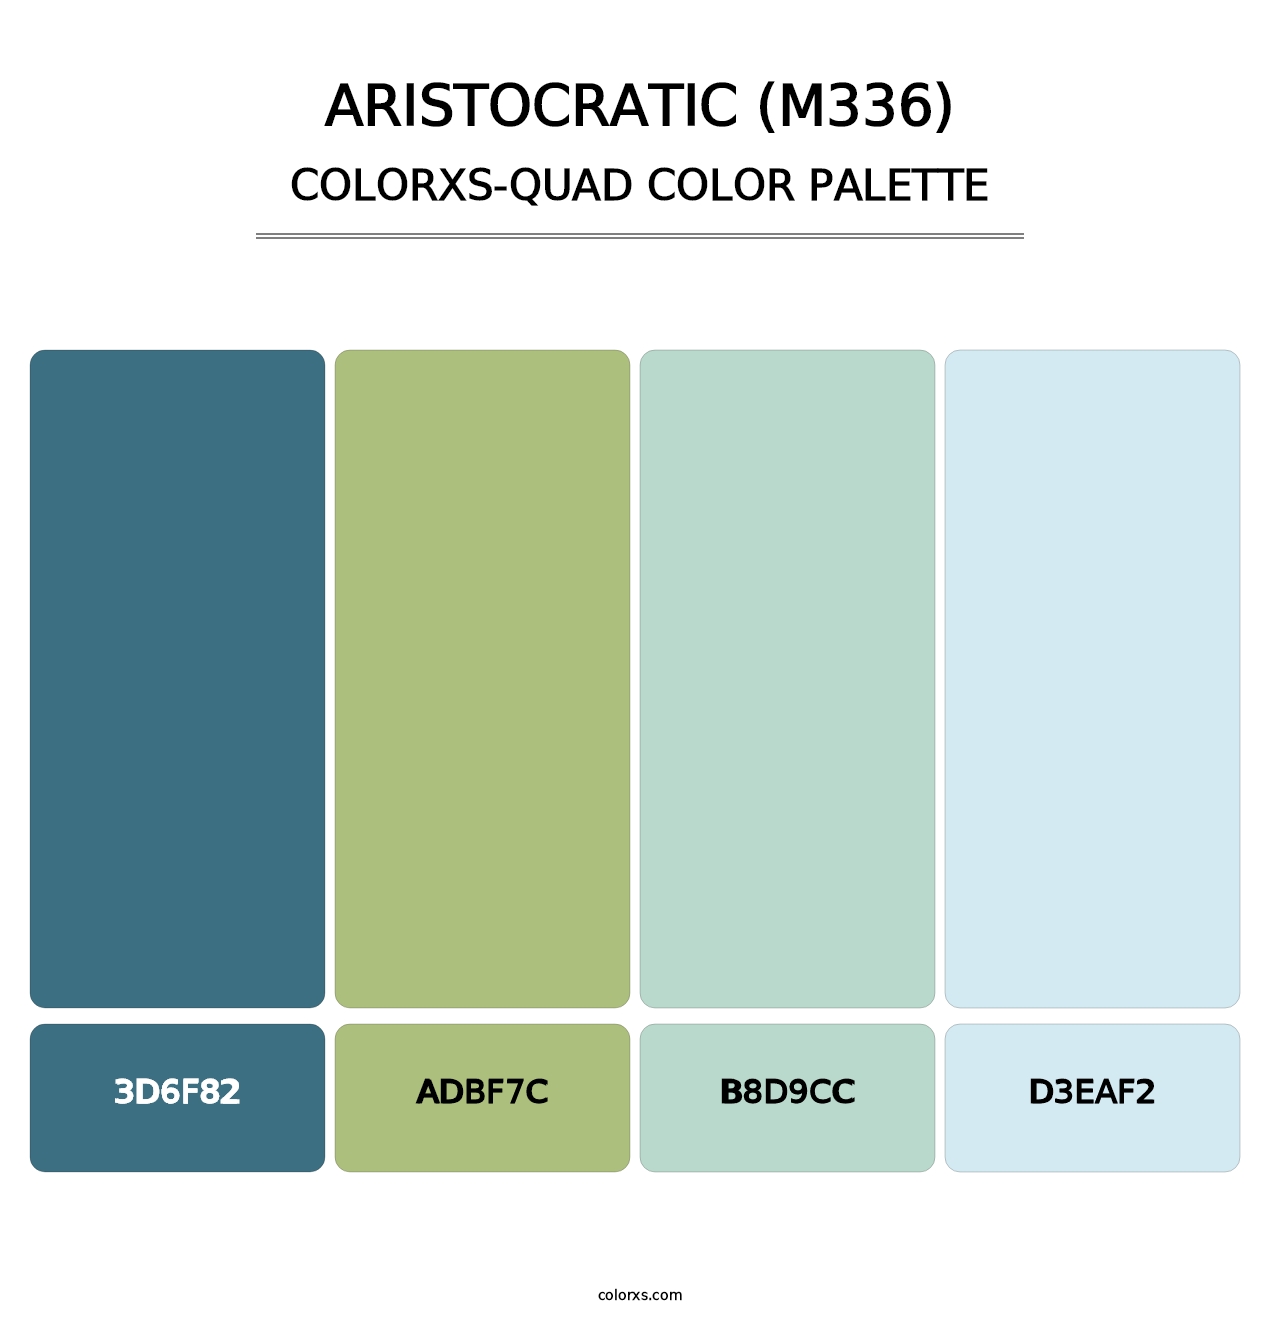 Aristocratic (M336) - Colorxs Quad Palette